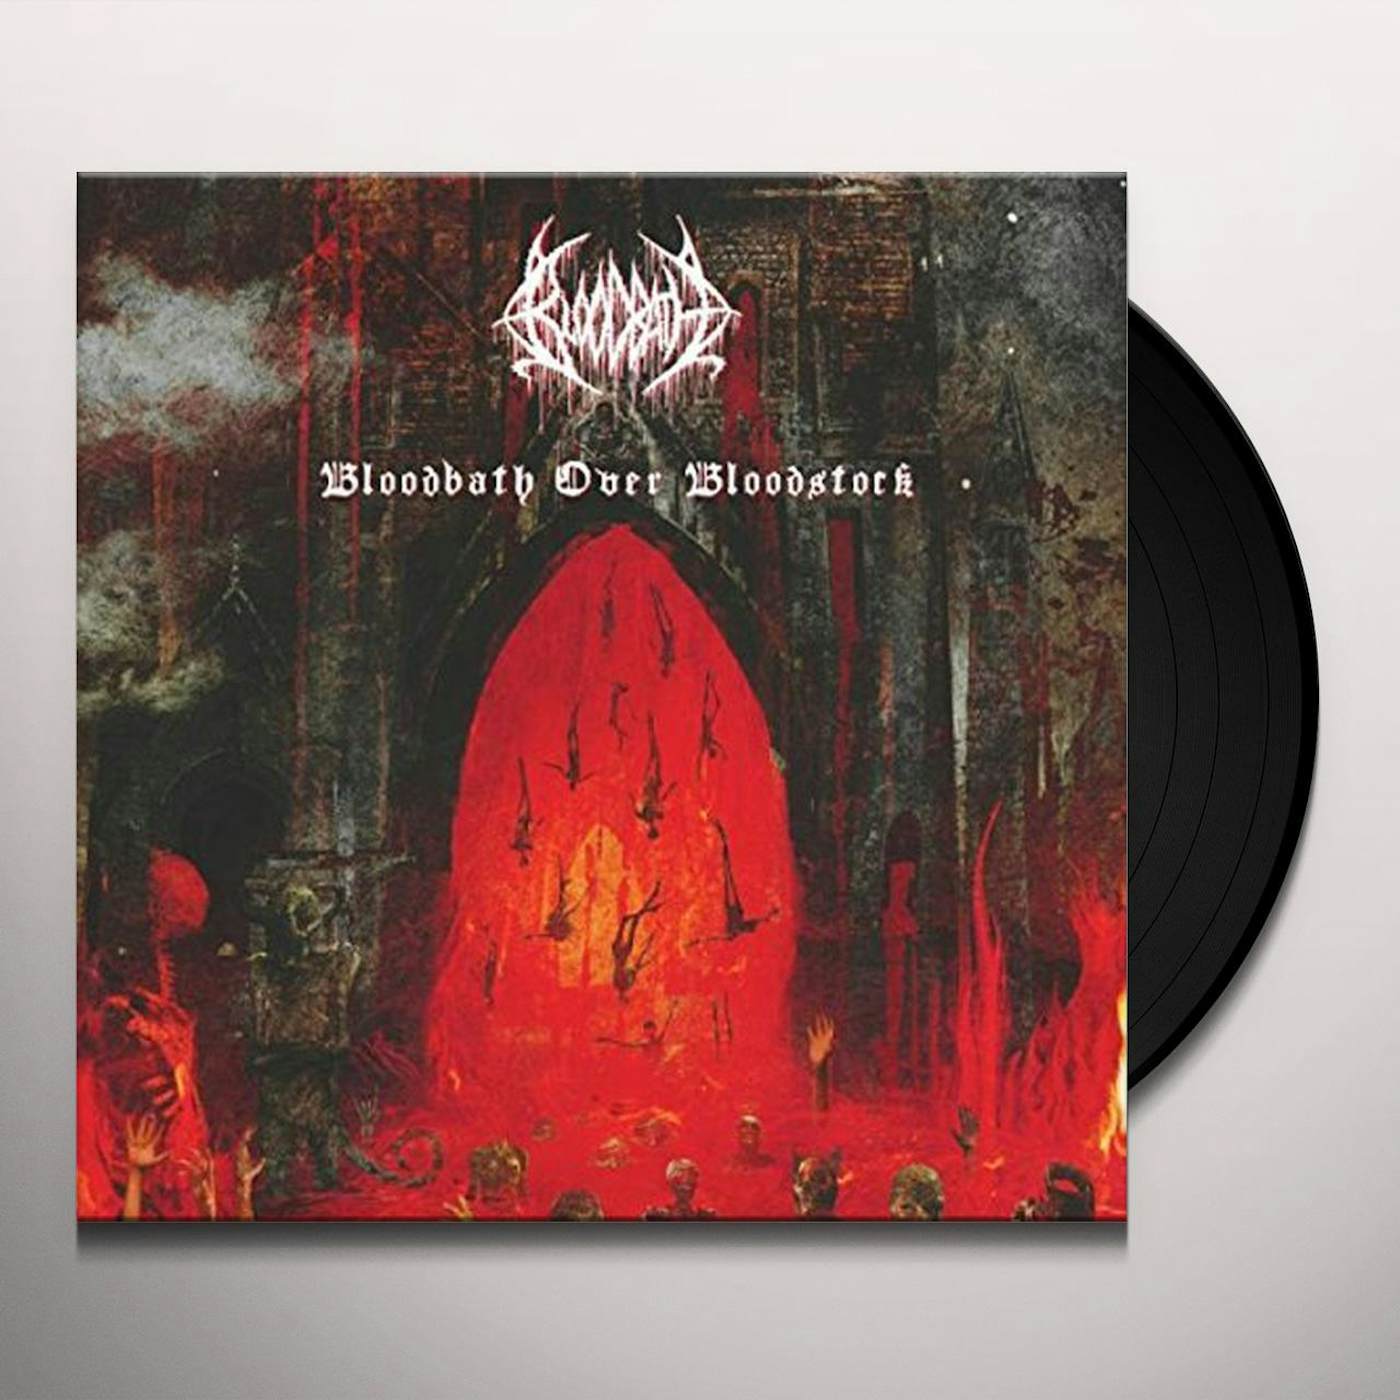 Bloodbath over Bloodstock Vinyl Record